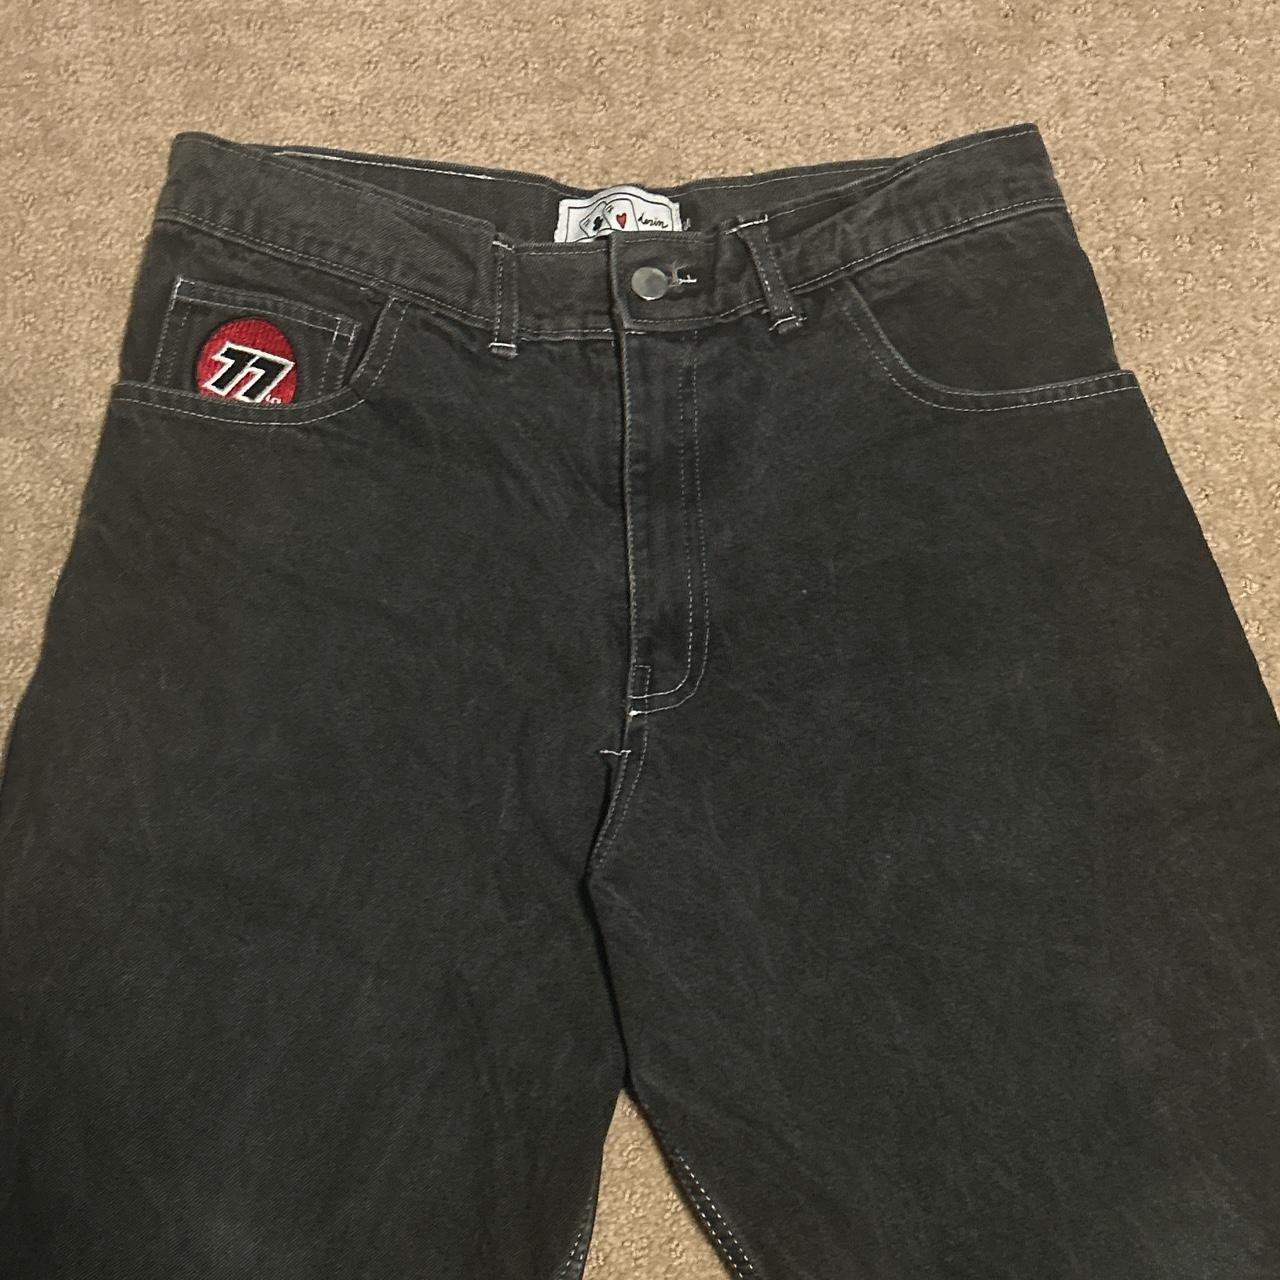 black/white contrast-stitch 77denim jeans These are... - Depop